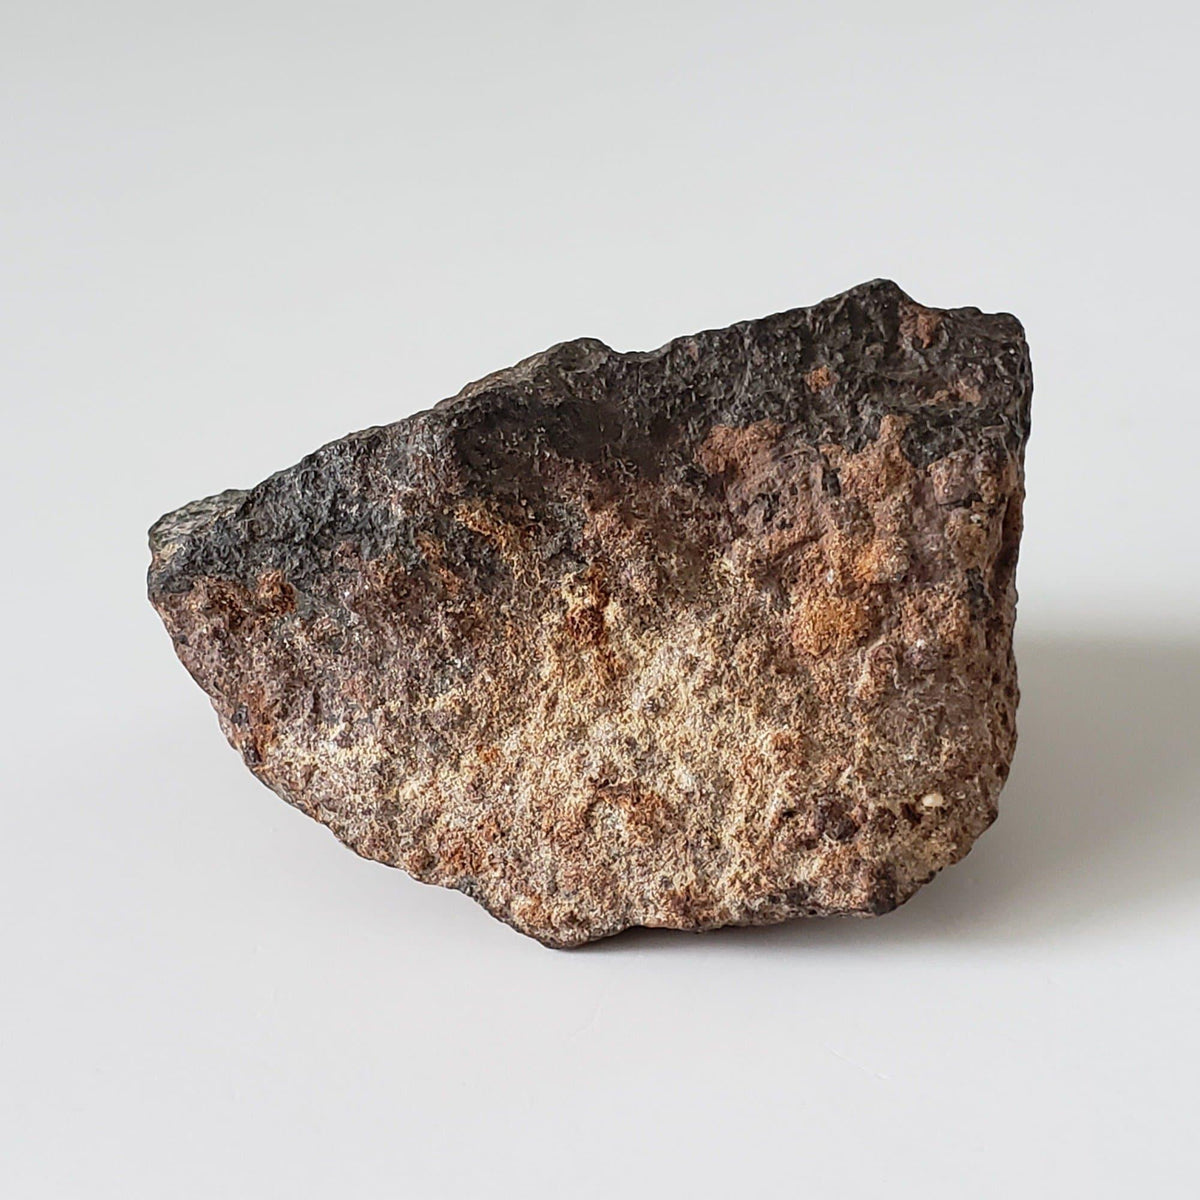 Ghubara Meteorite | 74 Gr | Individual | Rare Stony Black L5 Chondrite